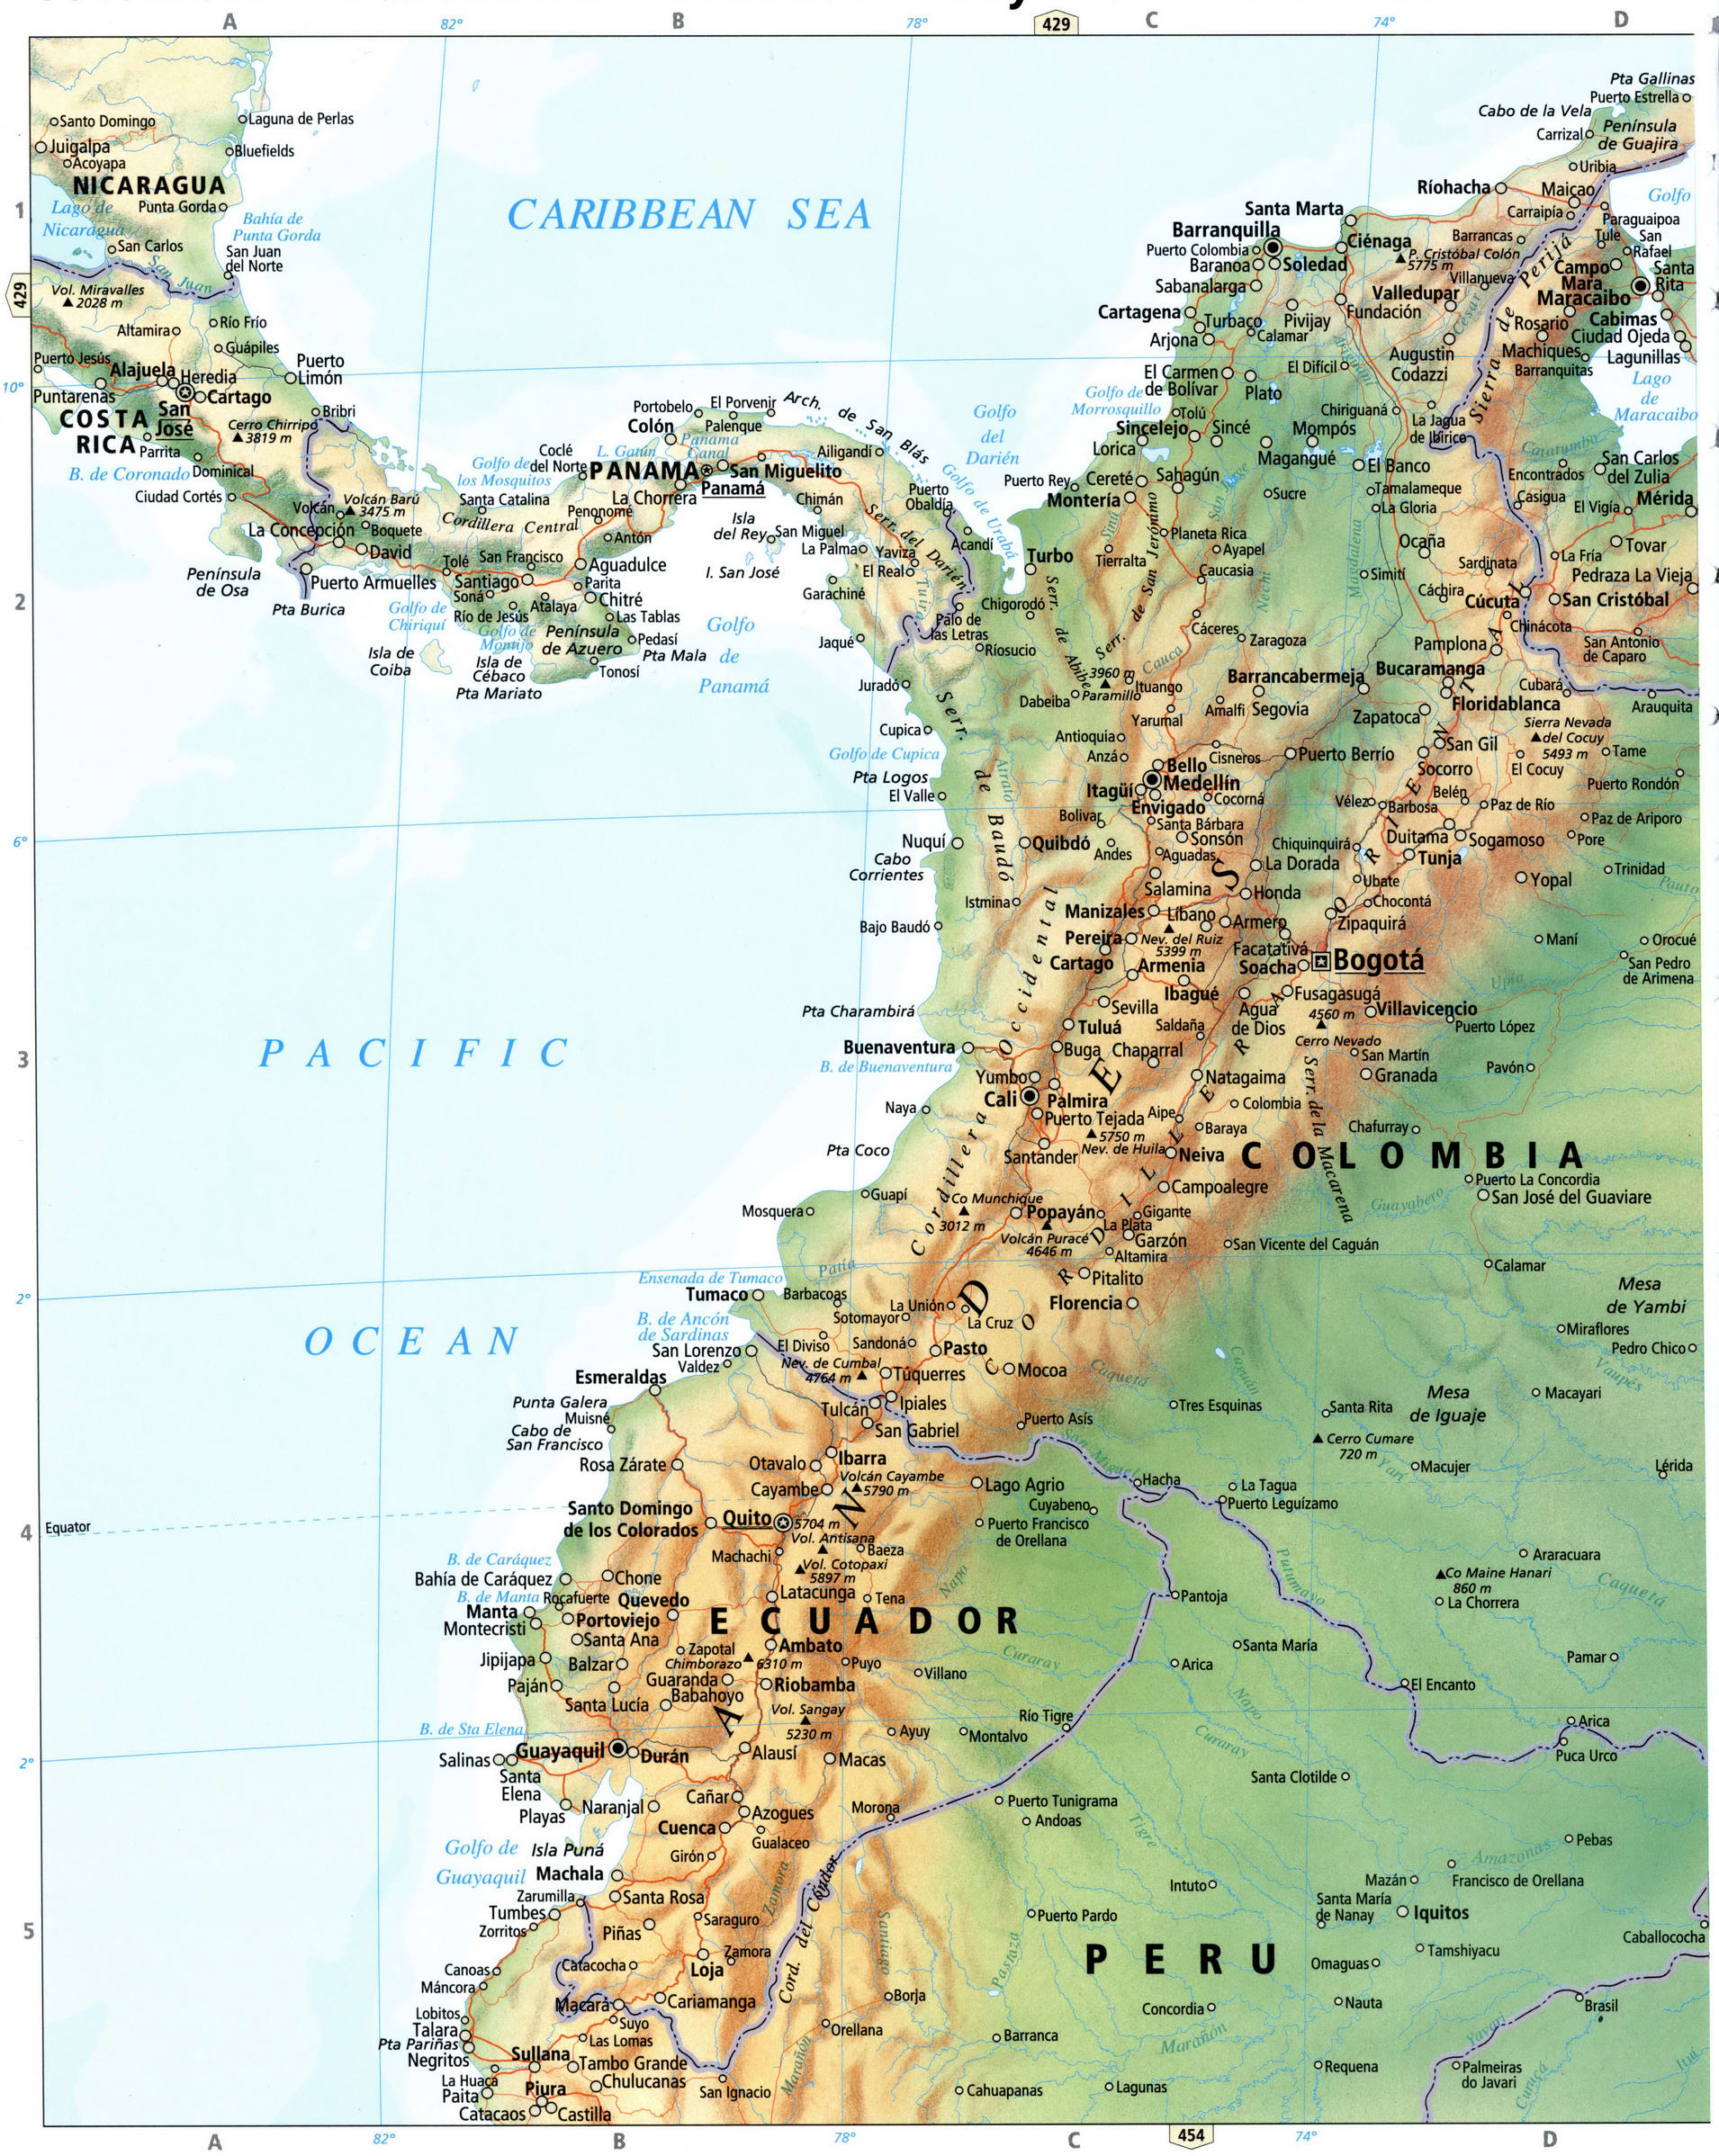 Colombia and Ecuador map